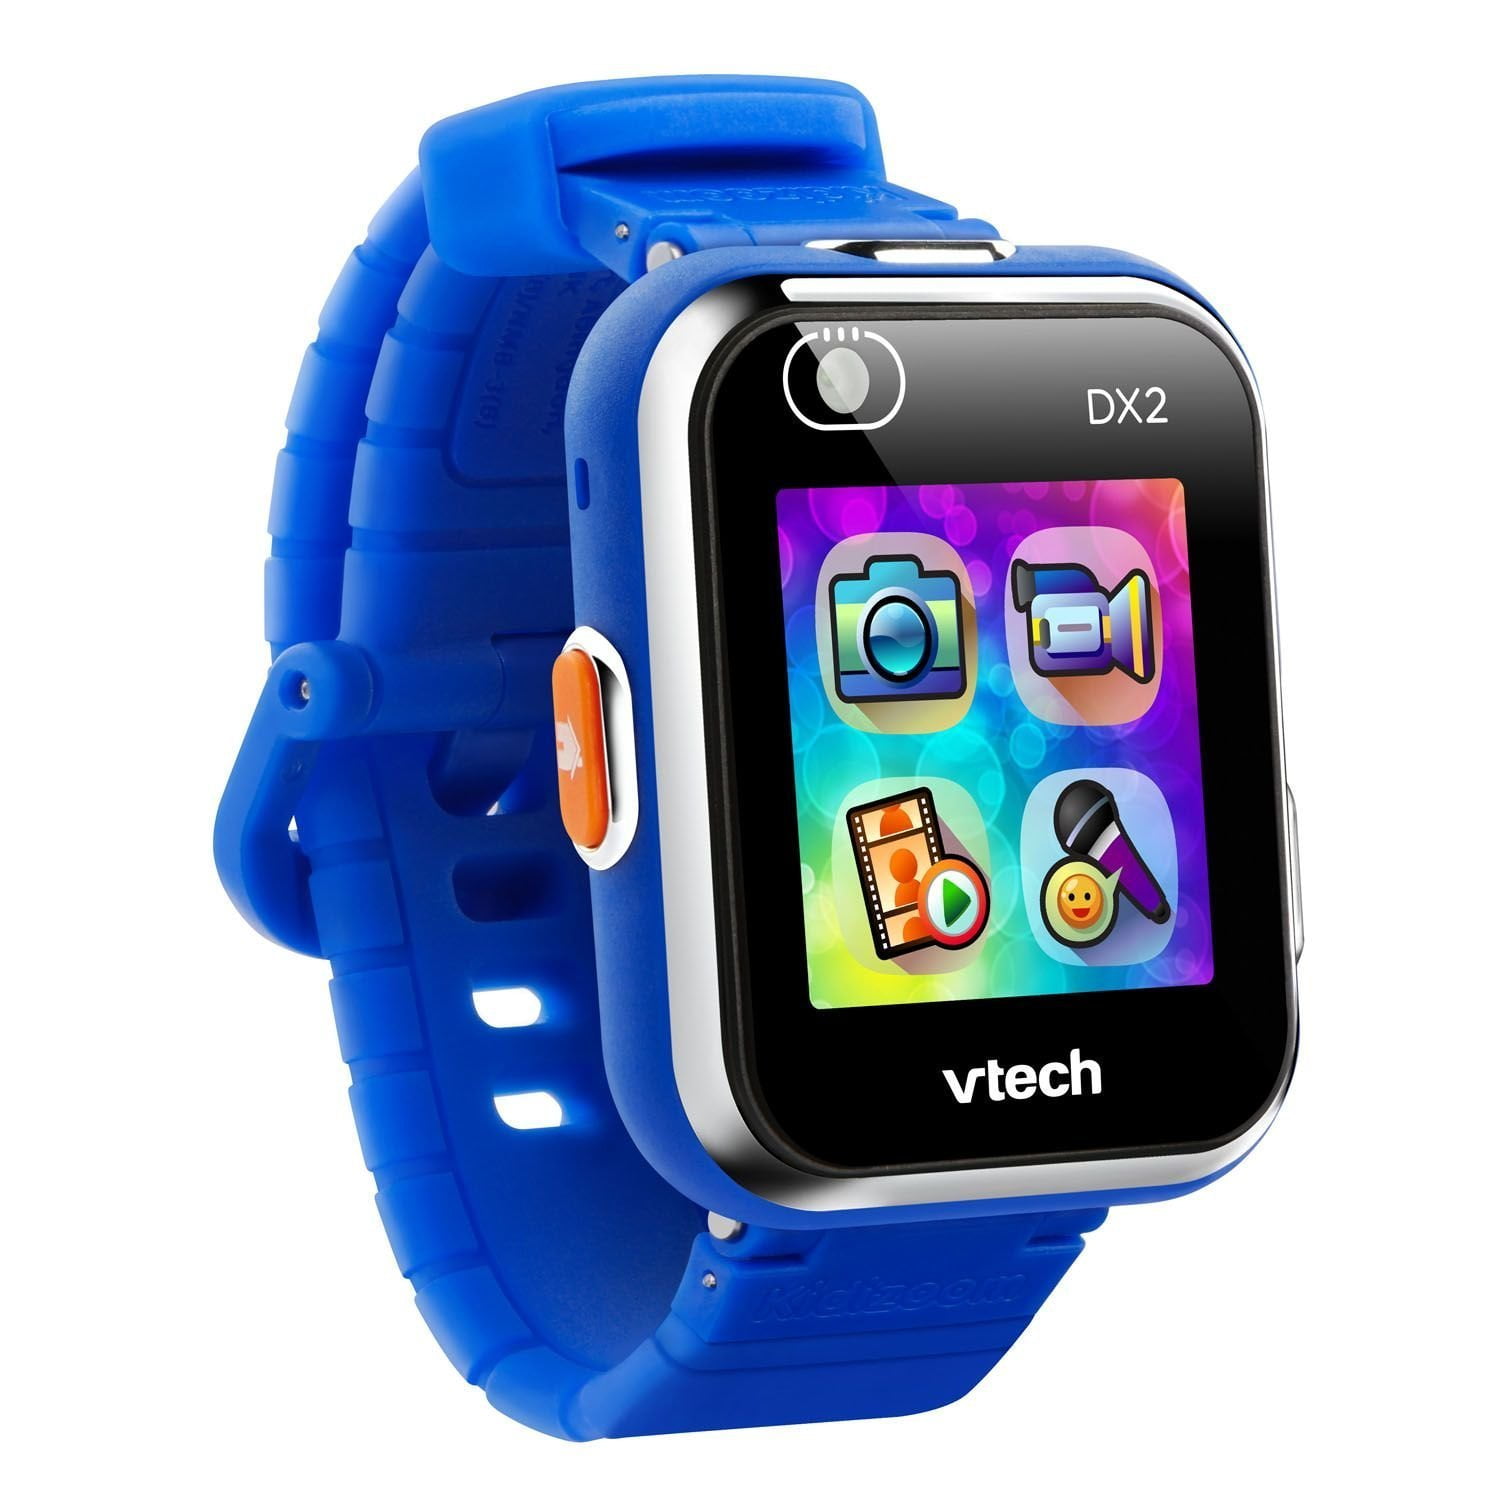 VTech Kidizoom Smartwatch DX2, Pink - Walmart.com